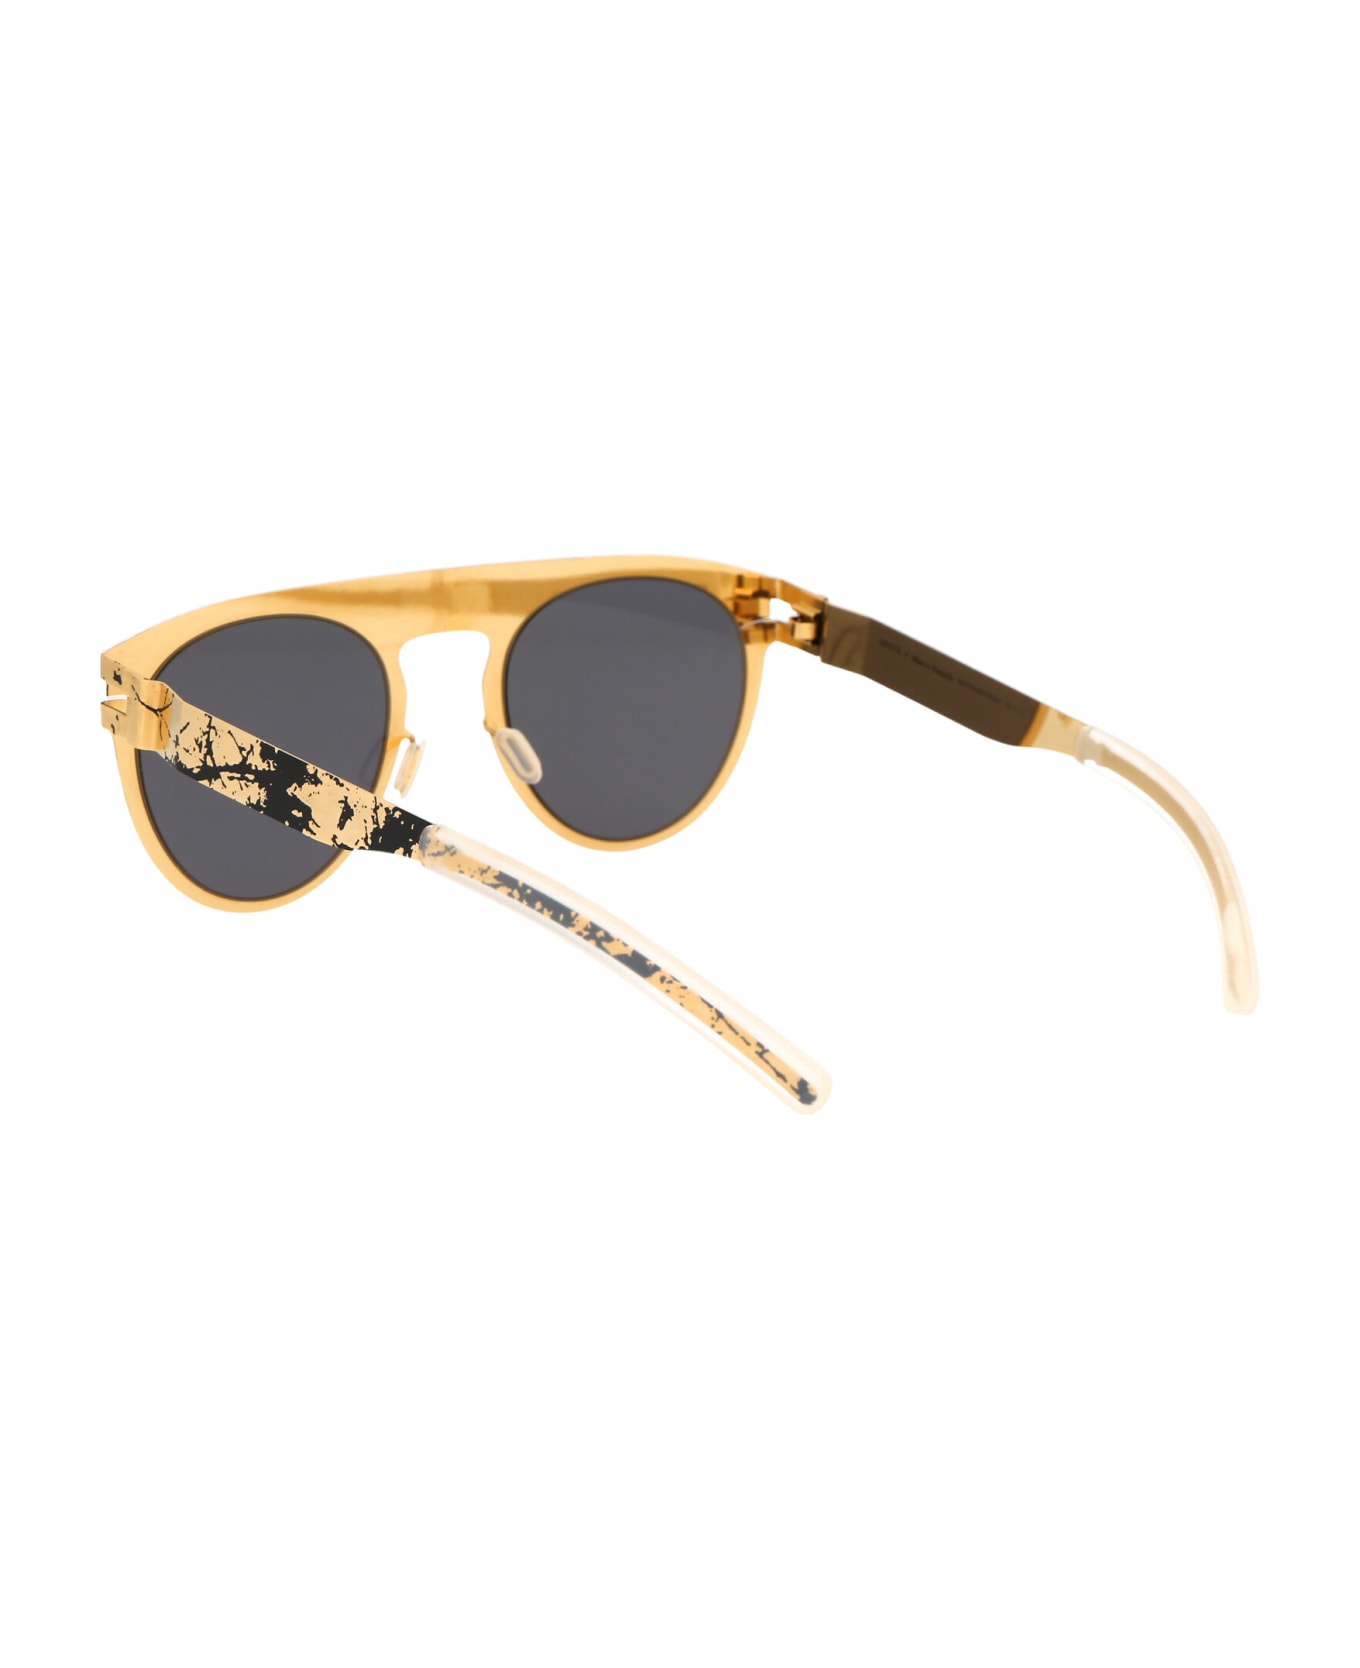 Mykita Mmtransfer004 Sunglasses - 267 GOLD BLACK STONE DARKGREY SOLID サングラス